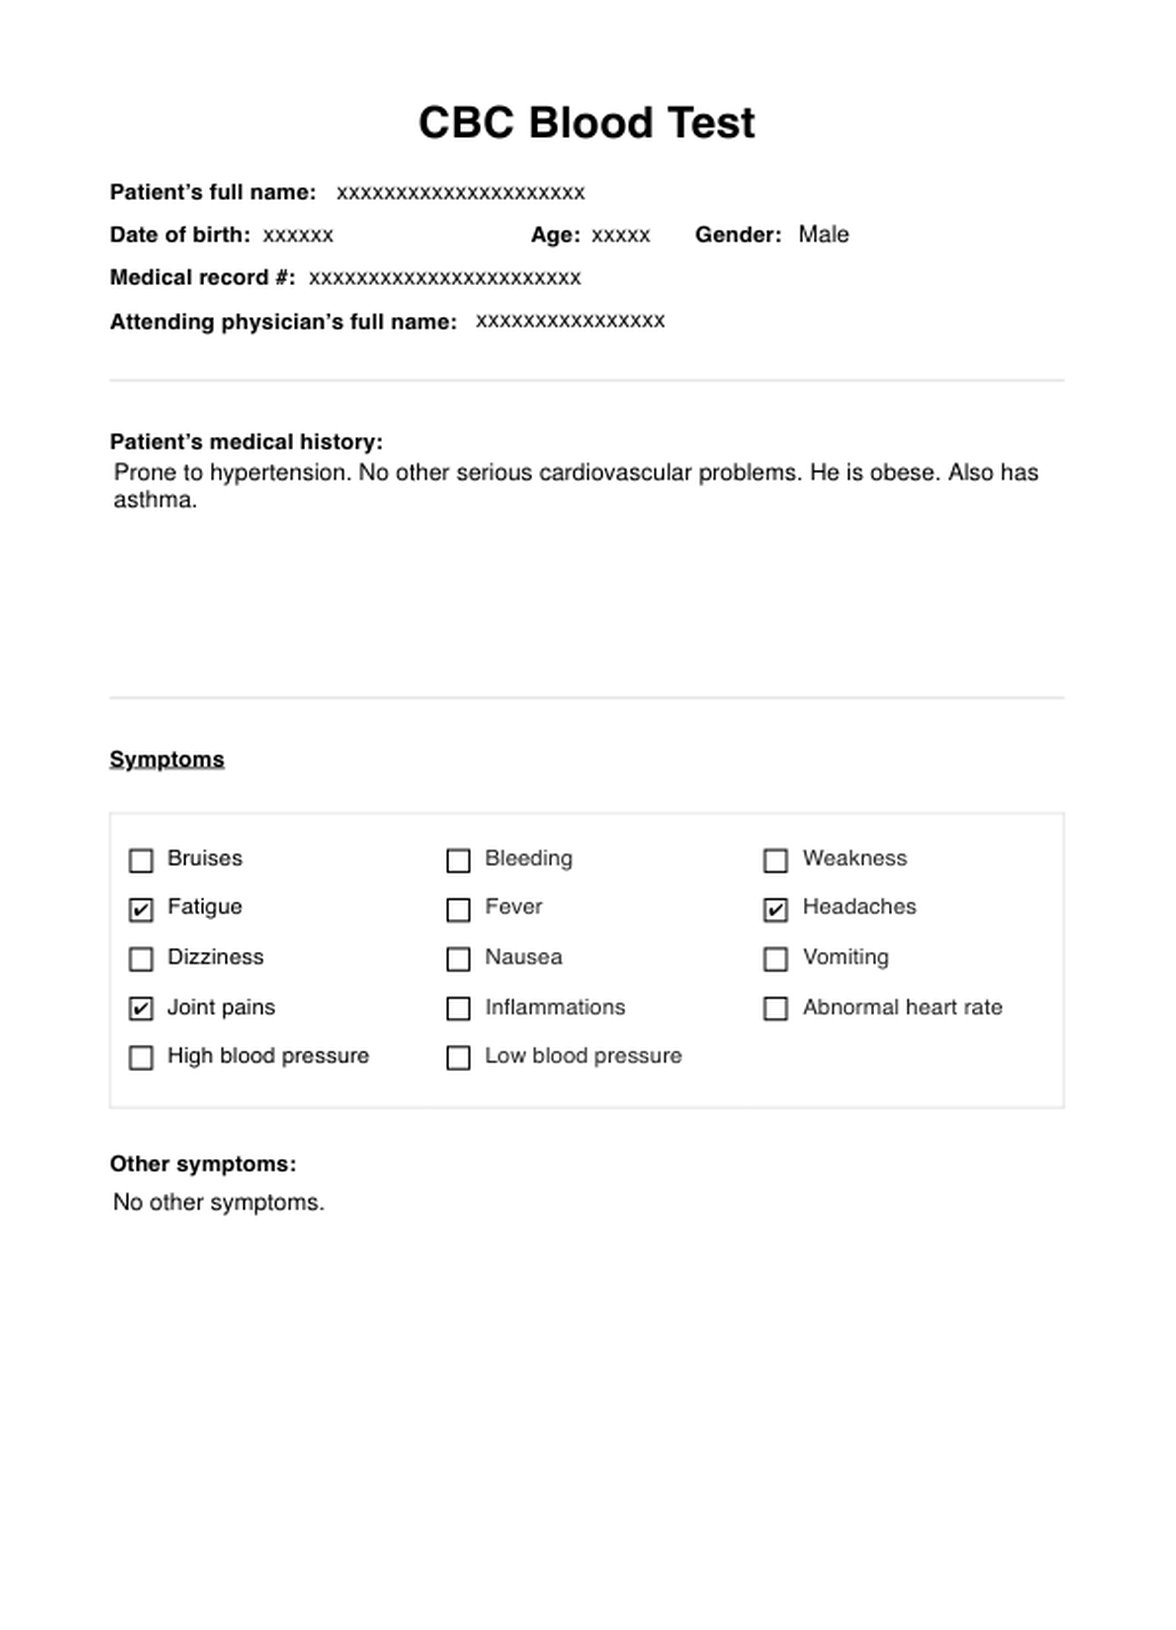 CBC Blood Test PDF Example